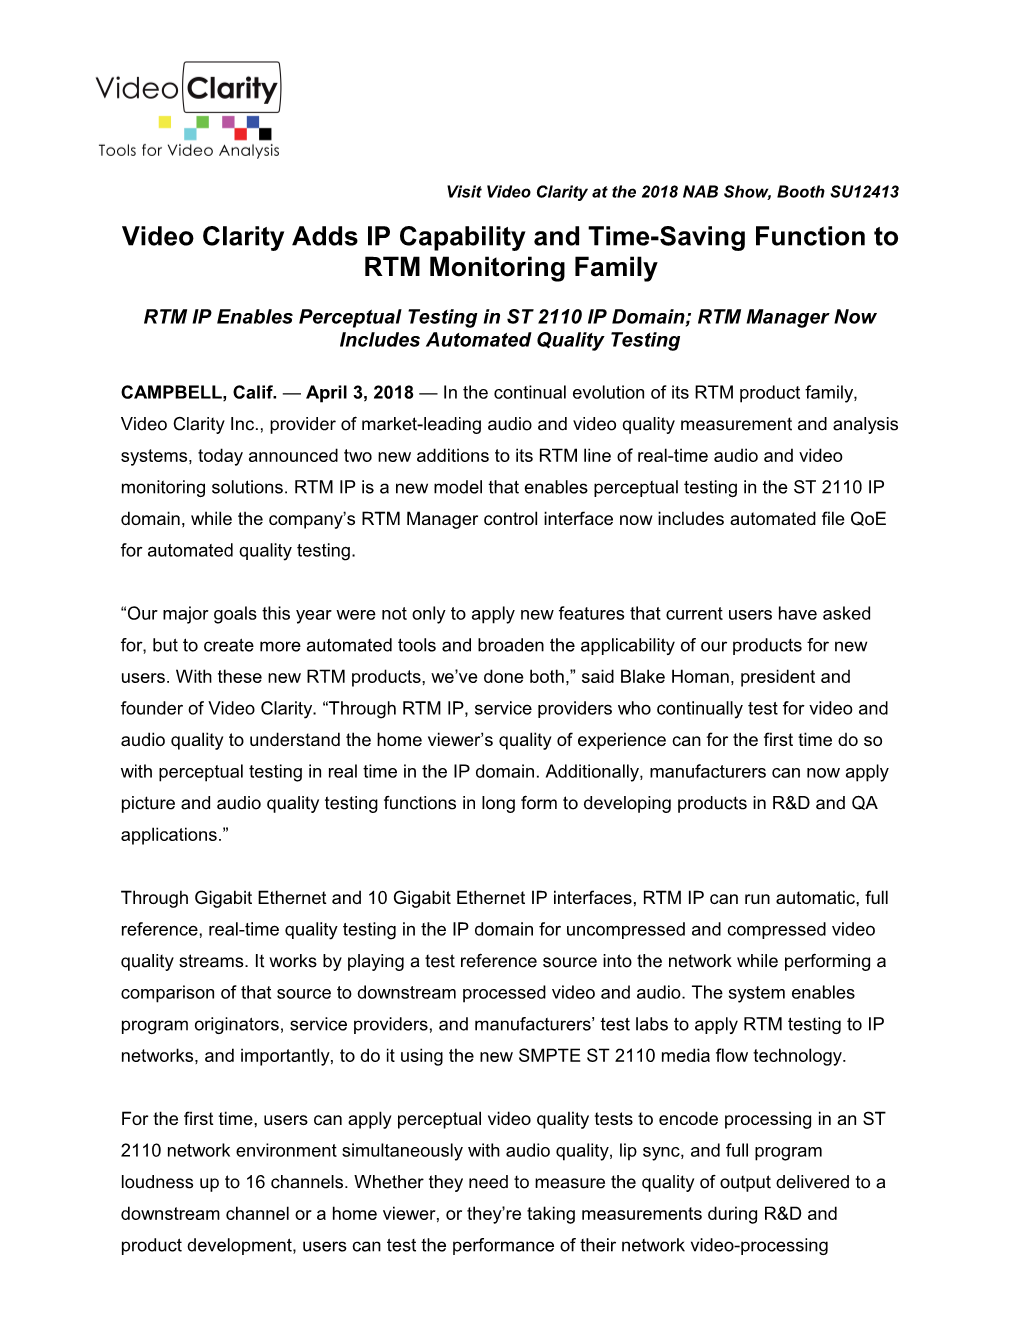 Video Clarity Press Release